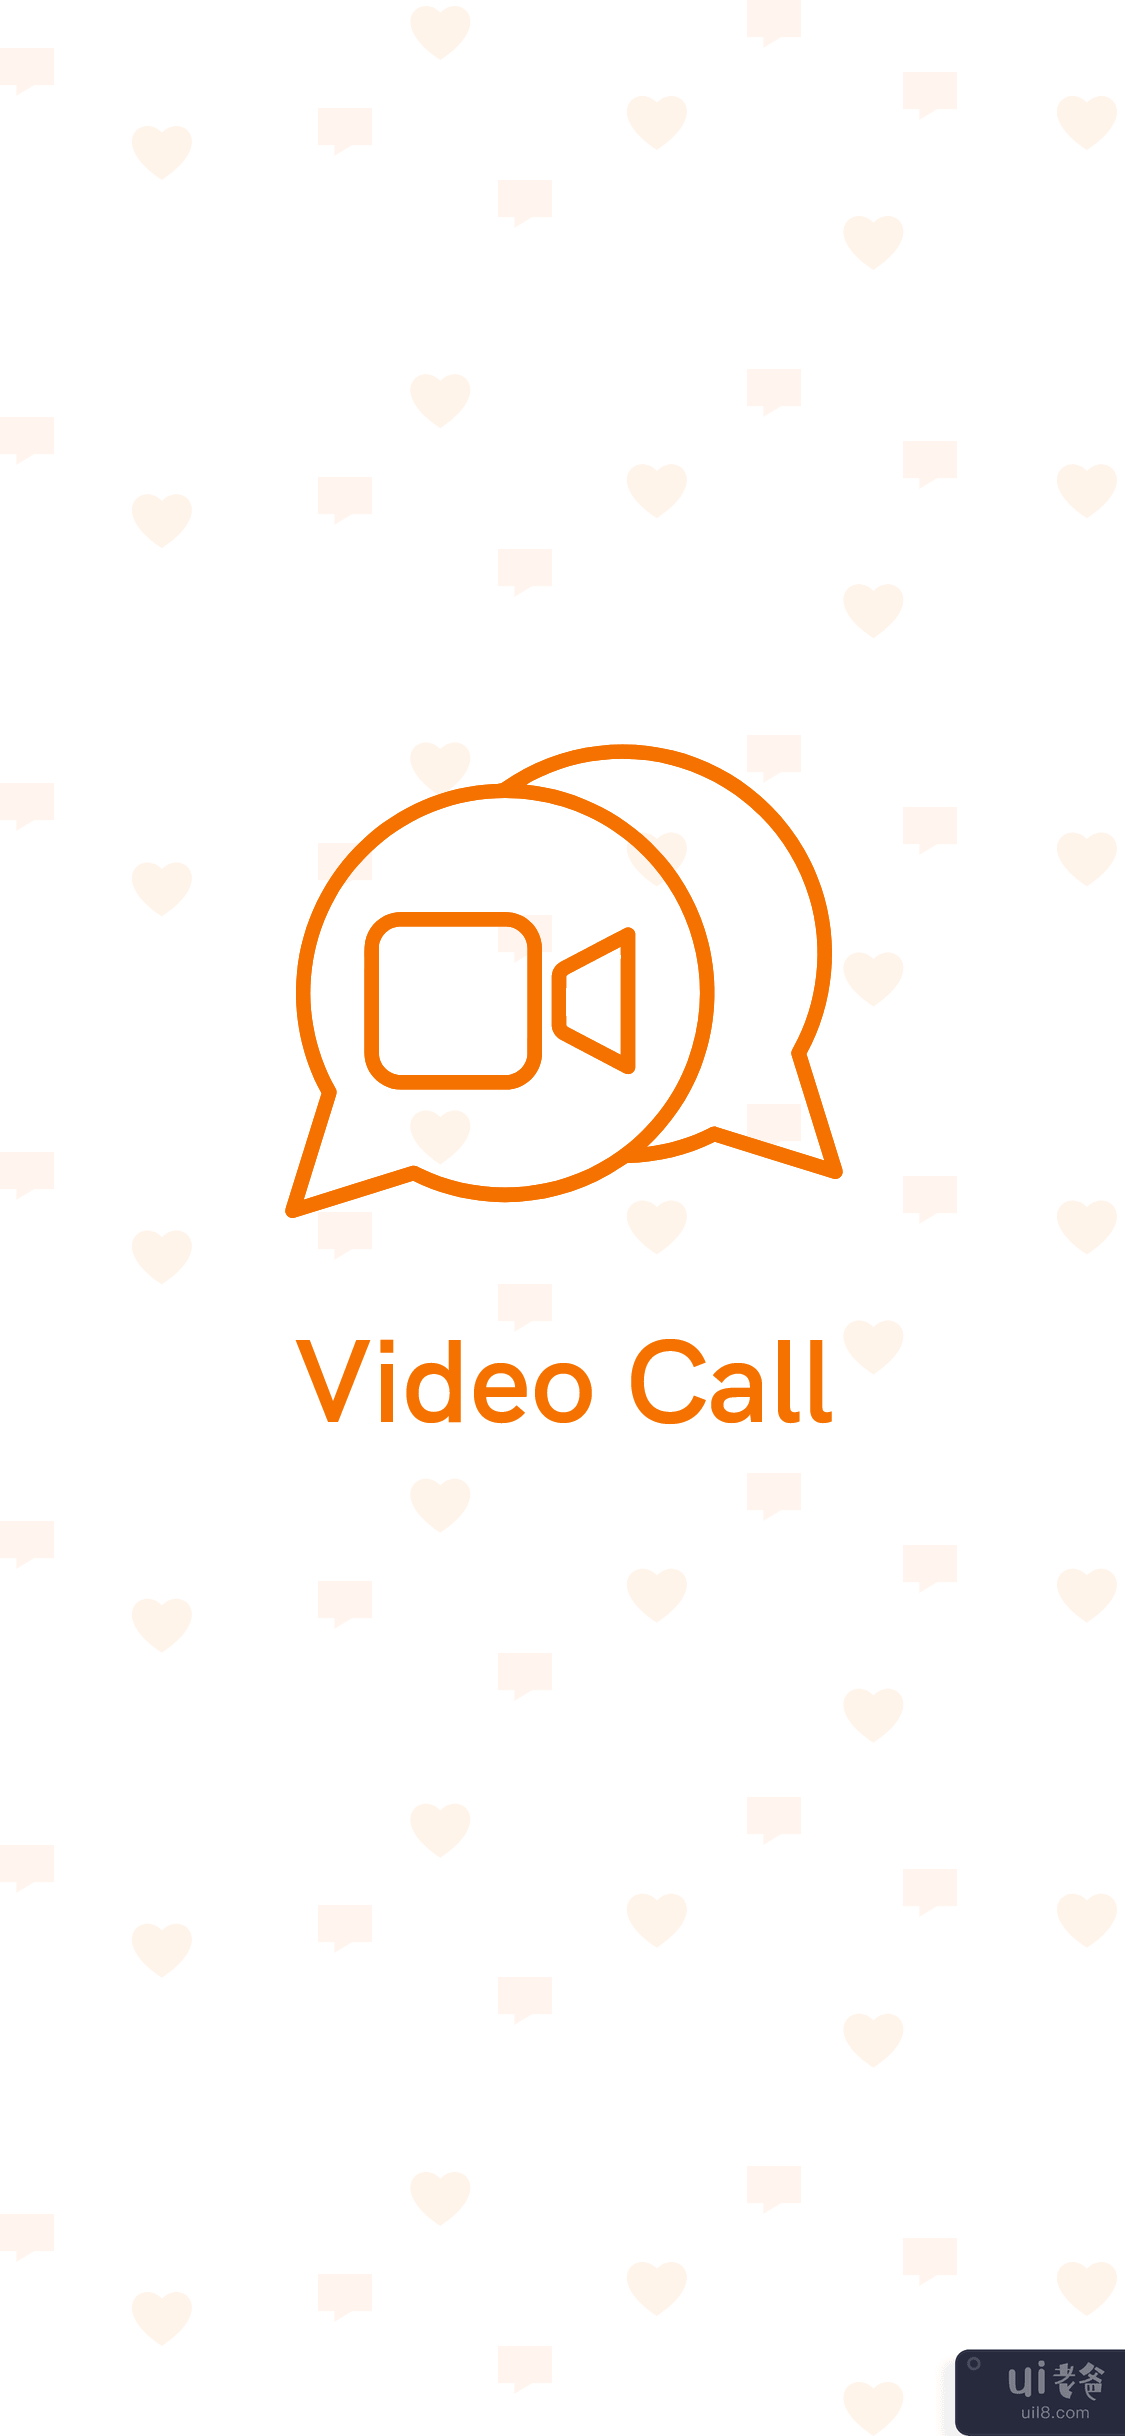 视频通话 App UI 设计 - 通话、消息、视频聊天(Video Calling App UI Design - Call, Message, Video chat)插图4